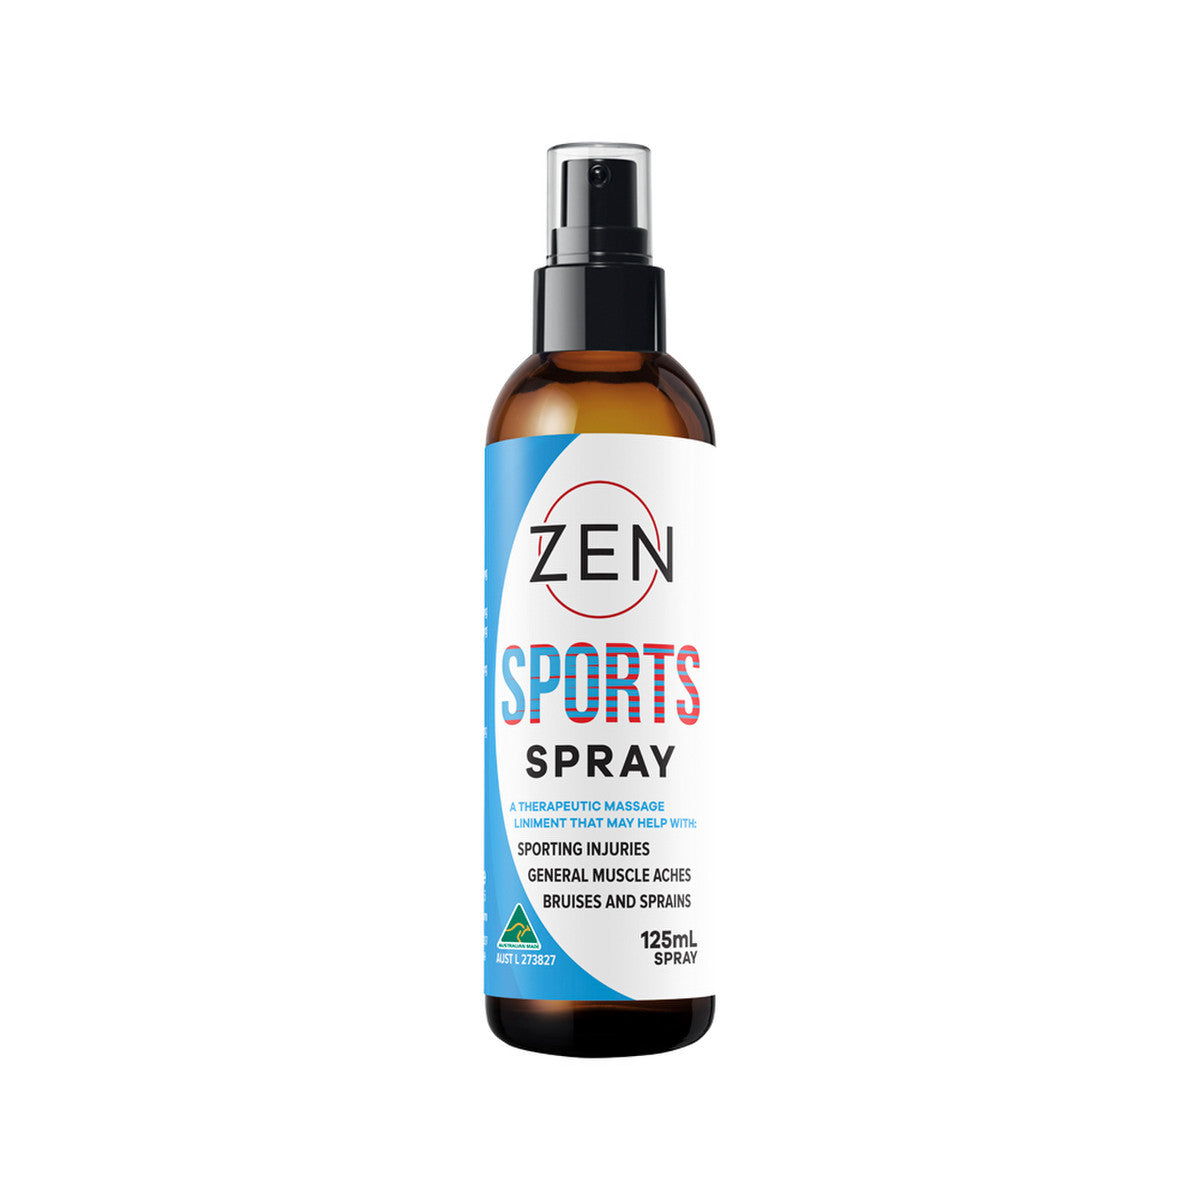 Zen - Sports Spray (Therapeutic Massage Liniment)